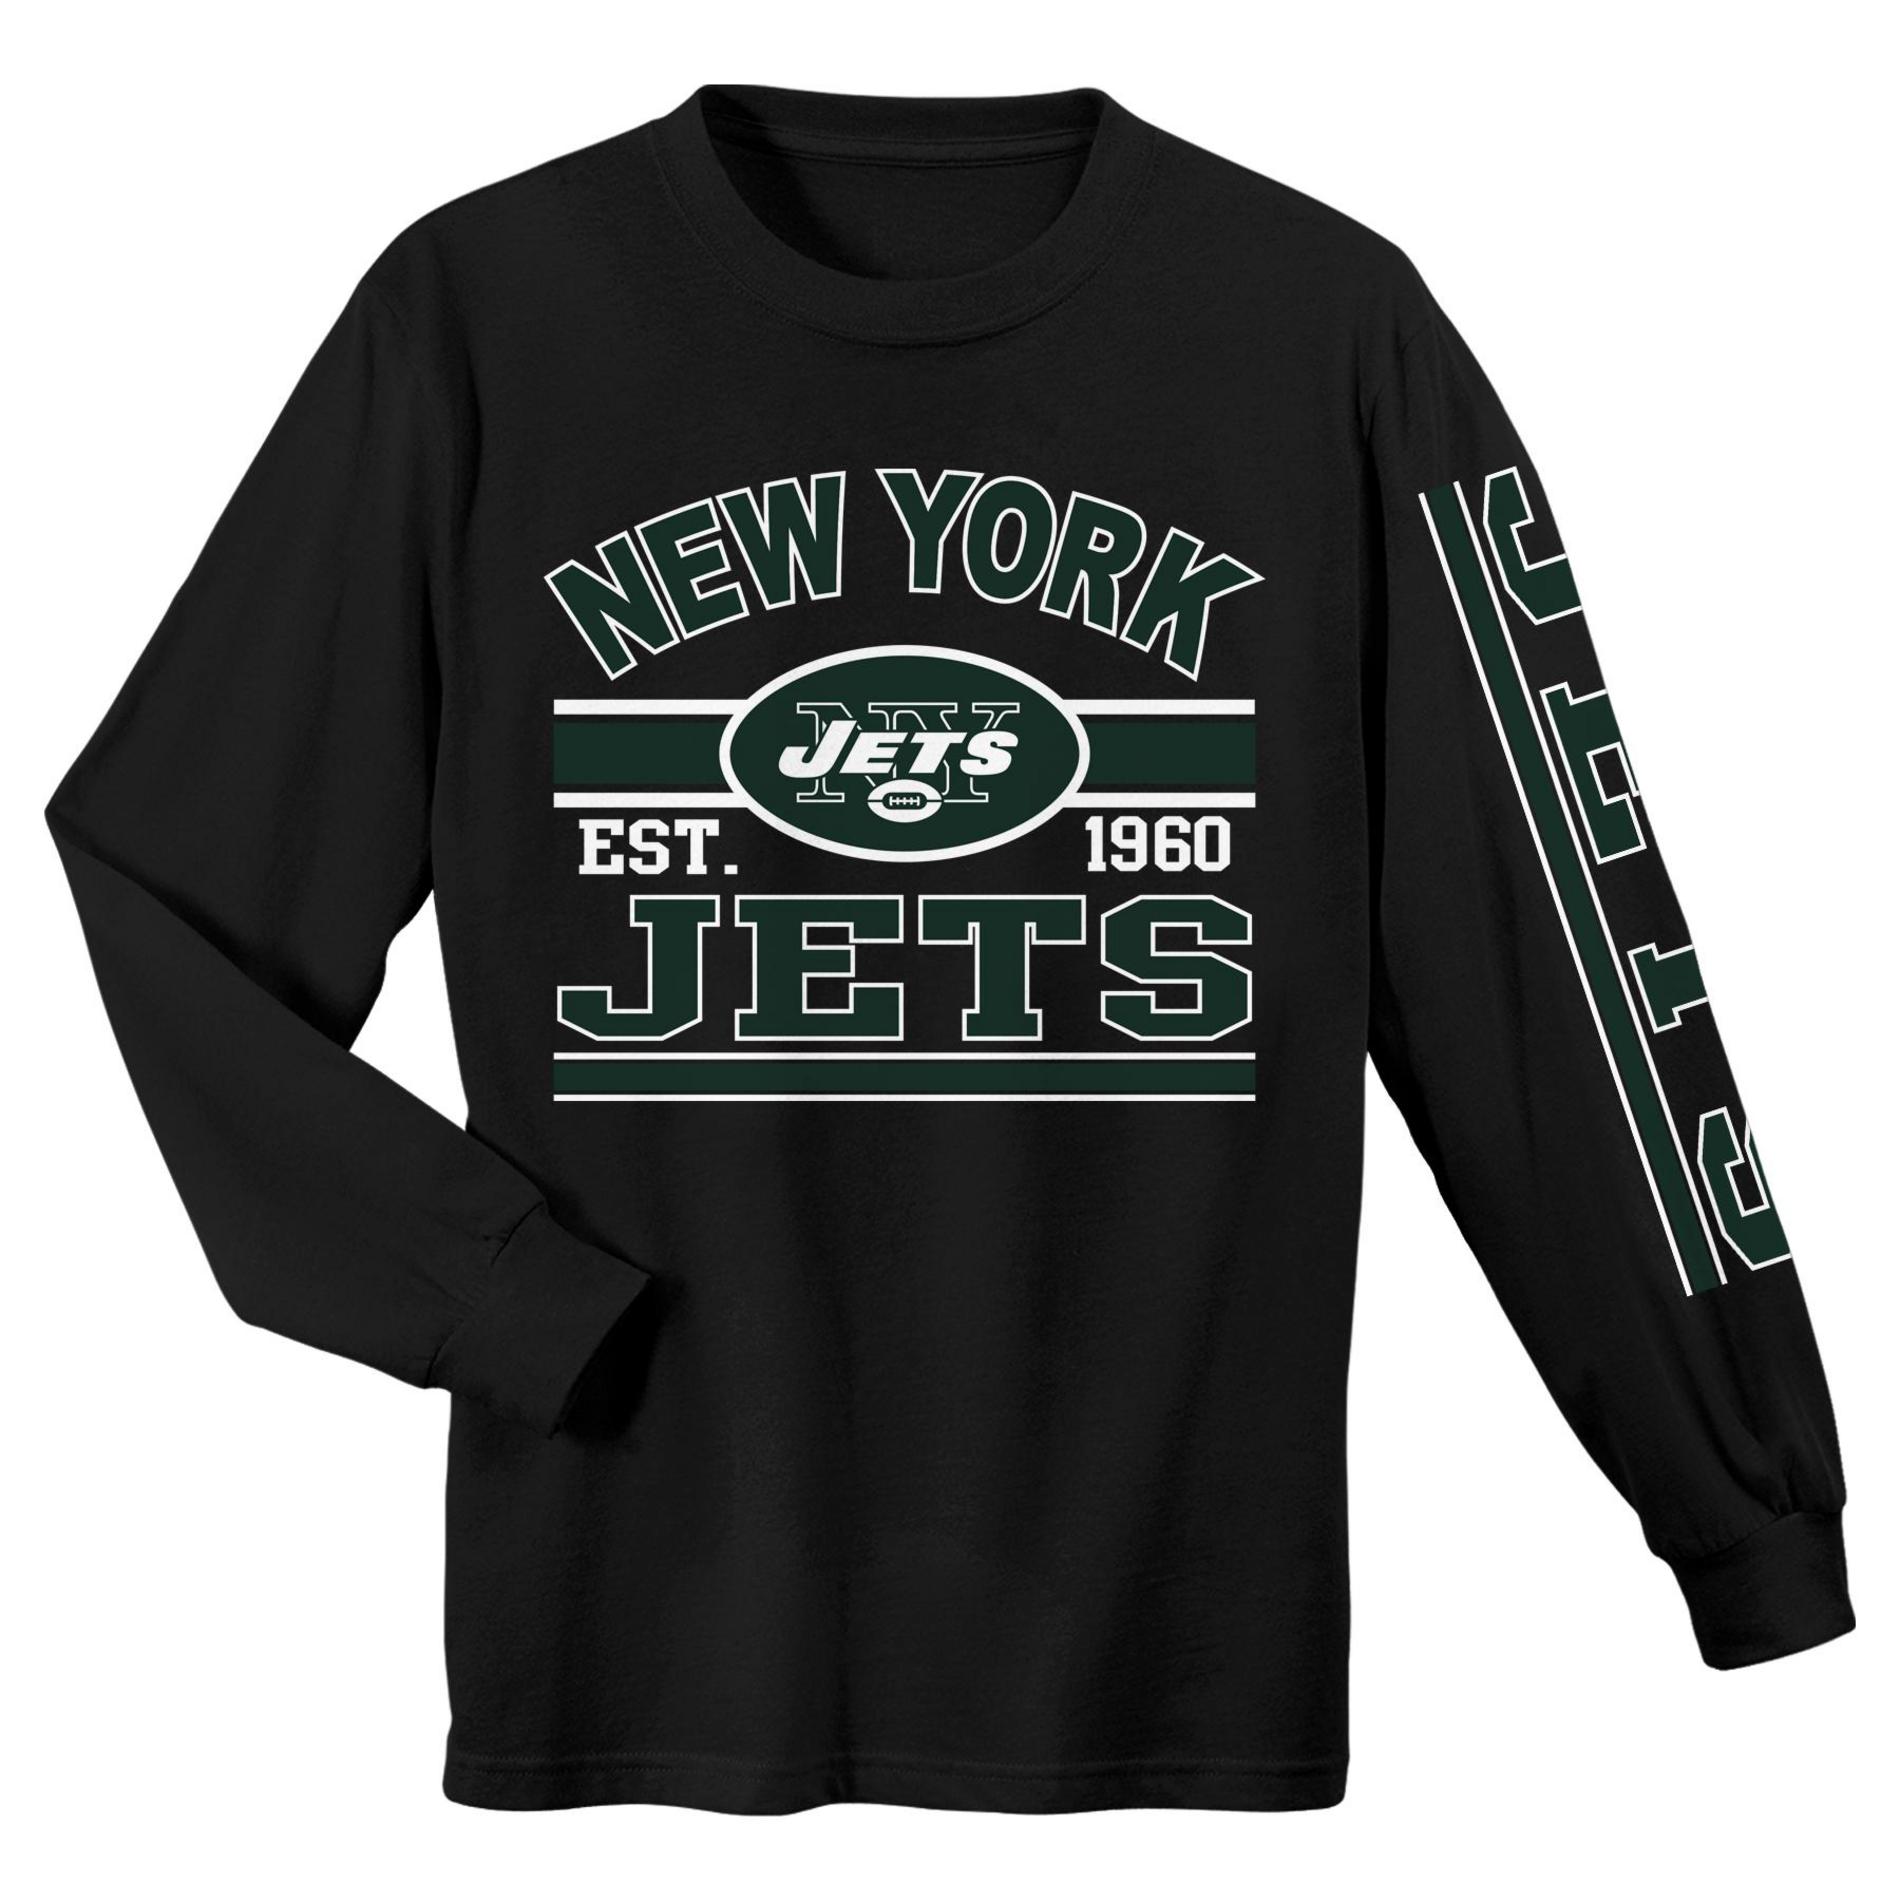 NFL Boys' Long-Sleeve Graphic T-Shirt - New York Jets